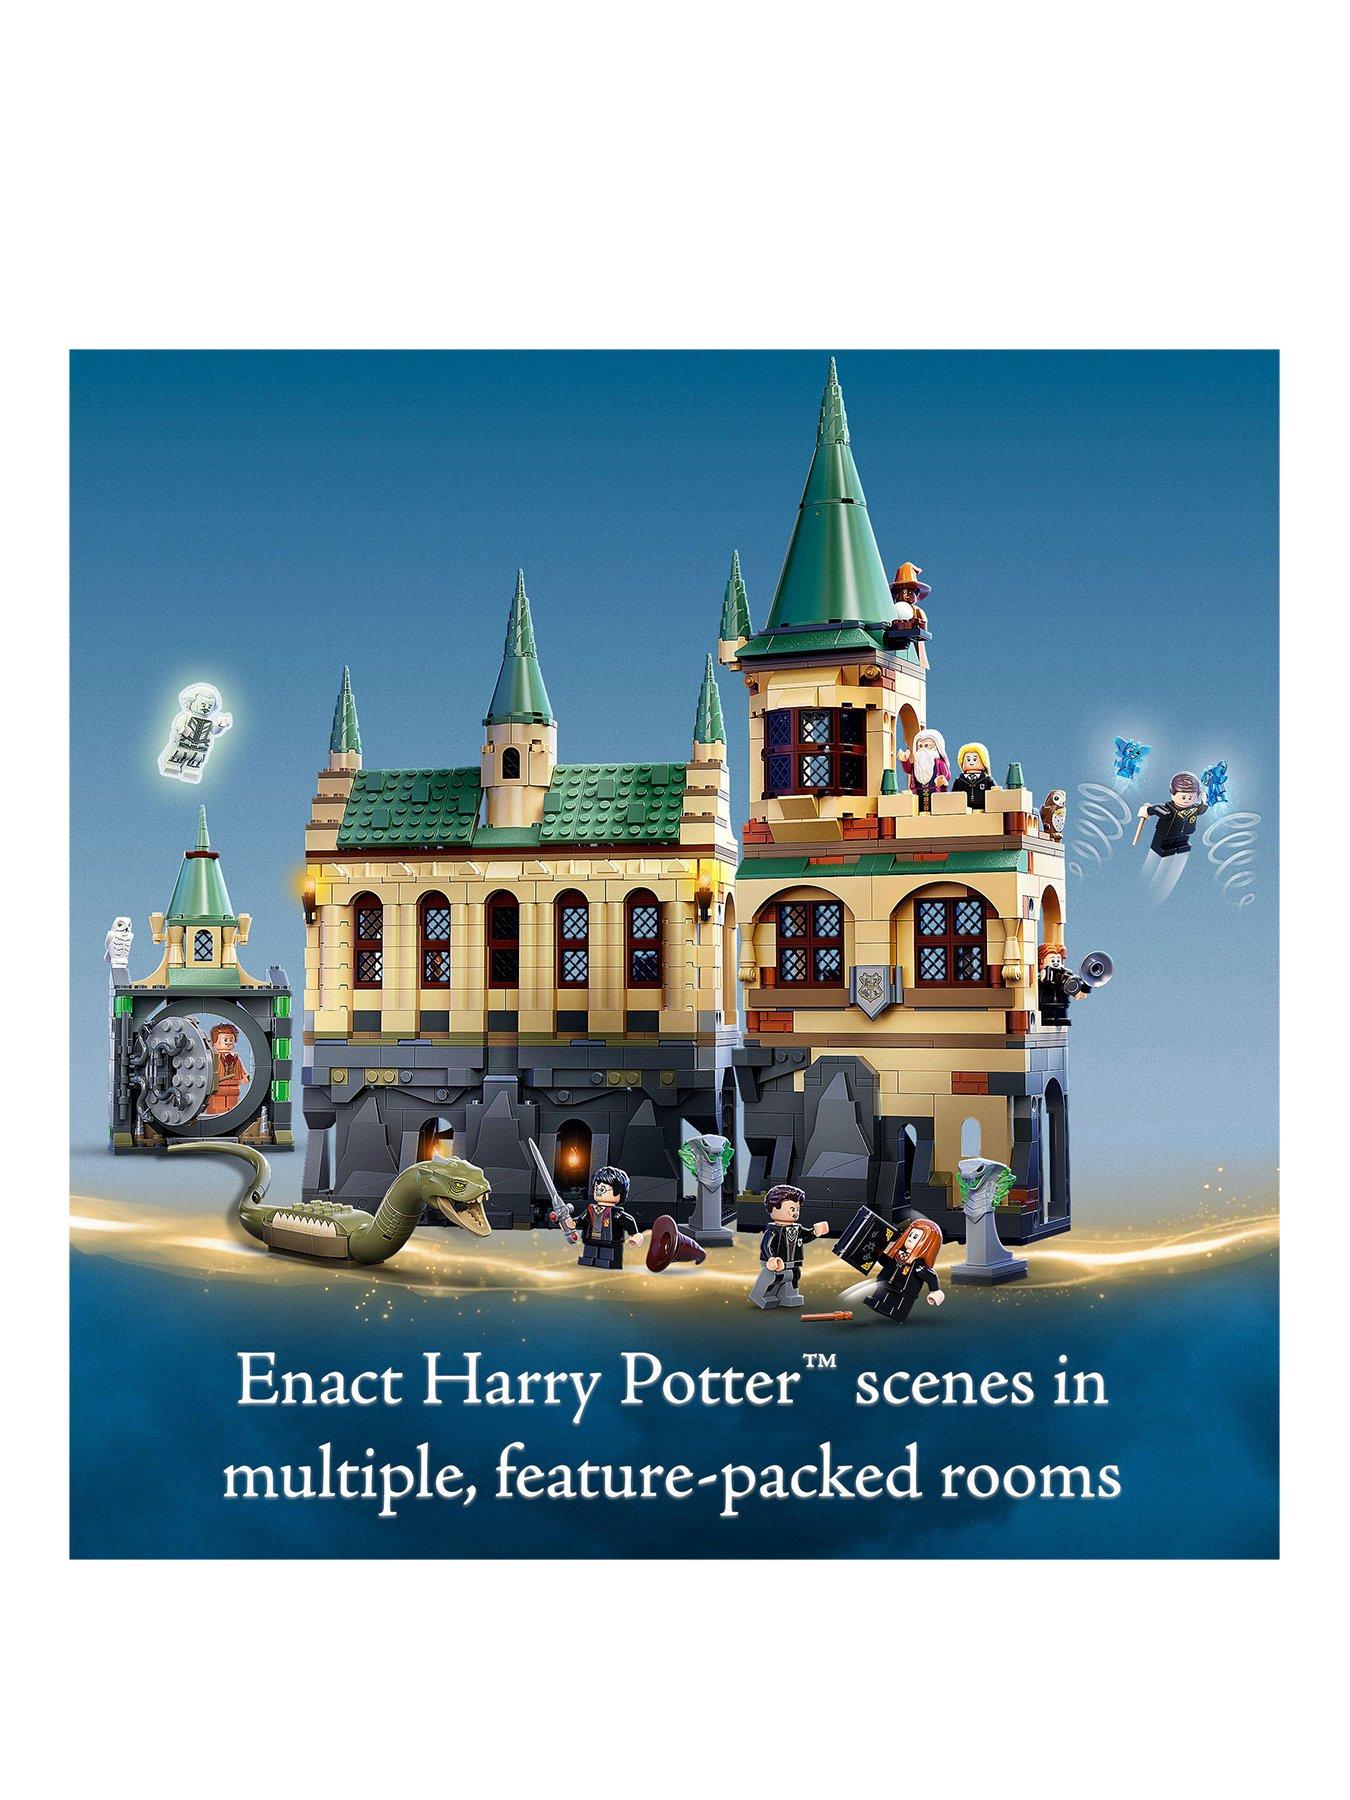 Hogwarts™ Chamber of Secrets 76389, Harry Potter™